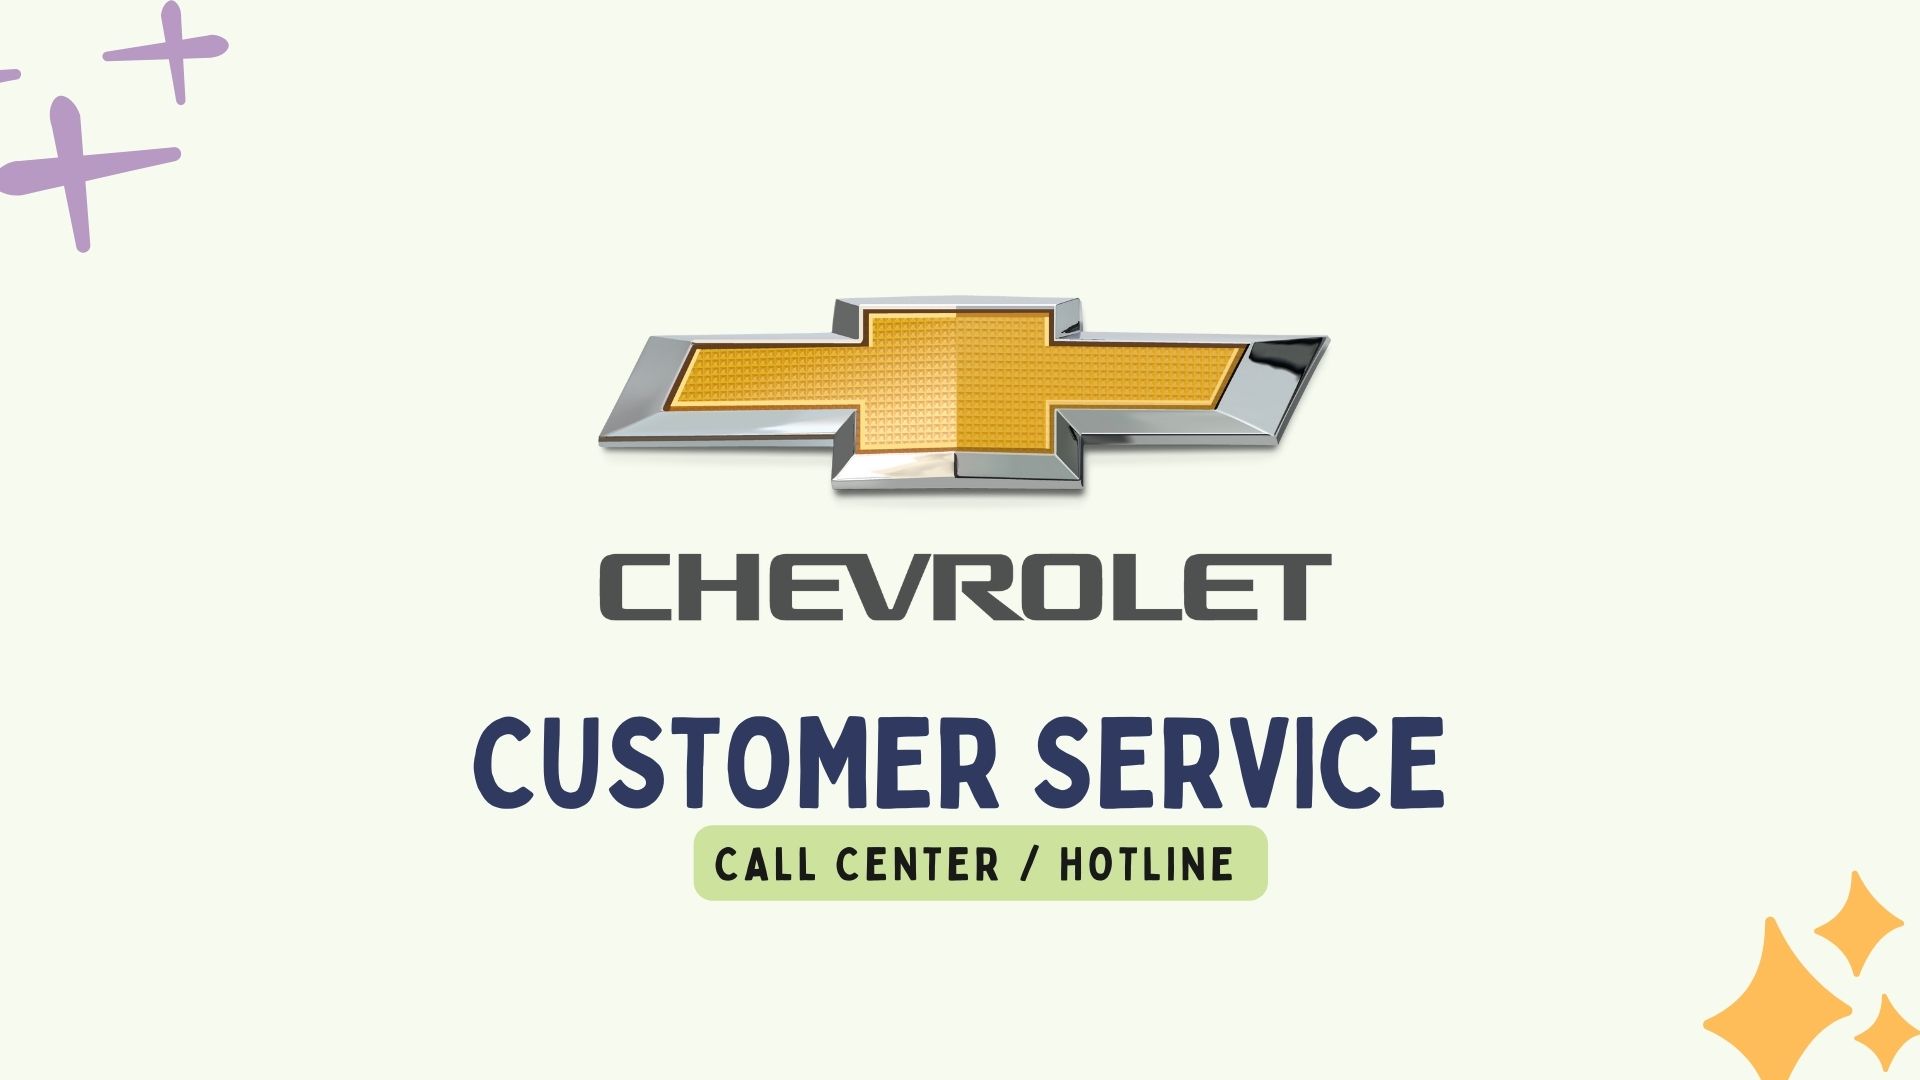 Chevrolet Customer Service